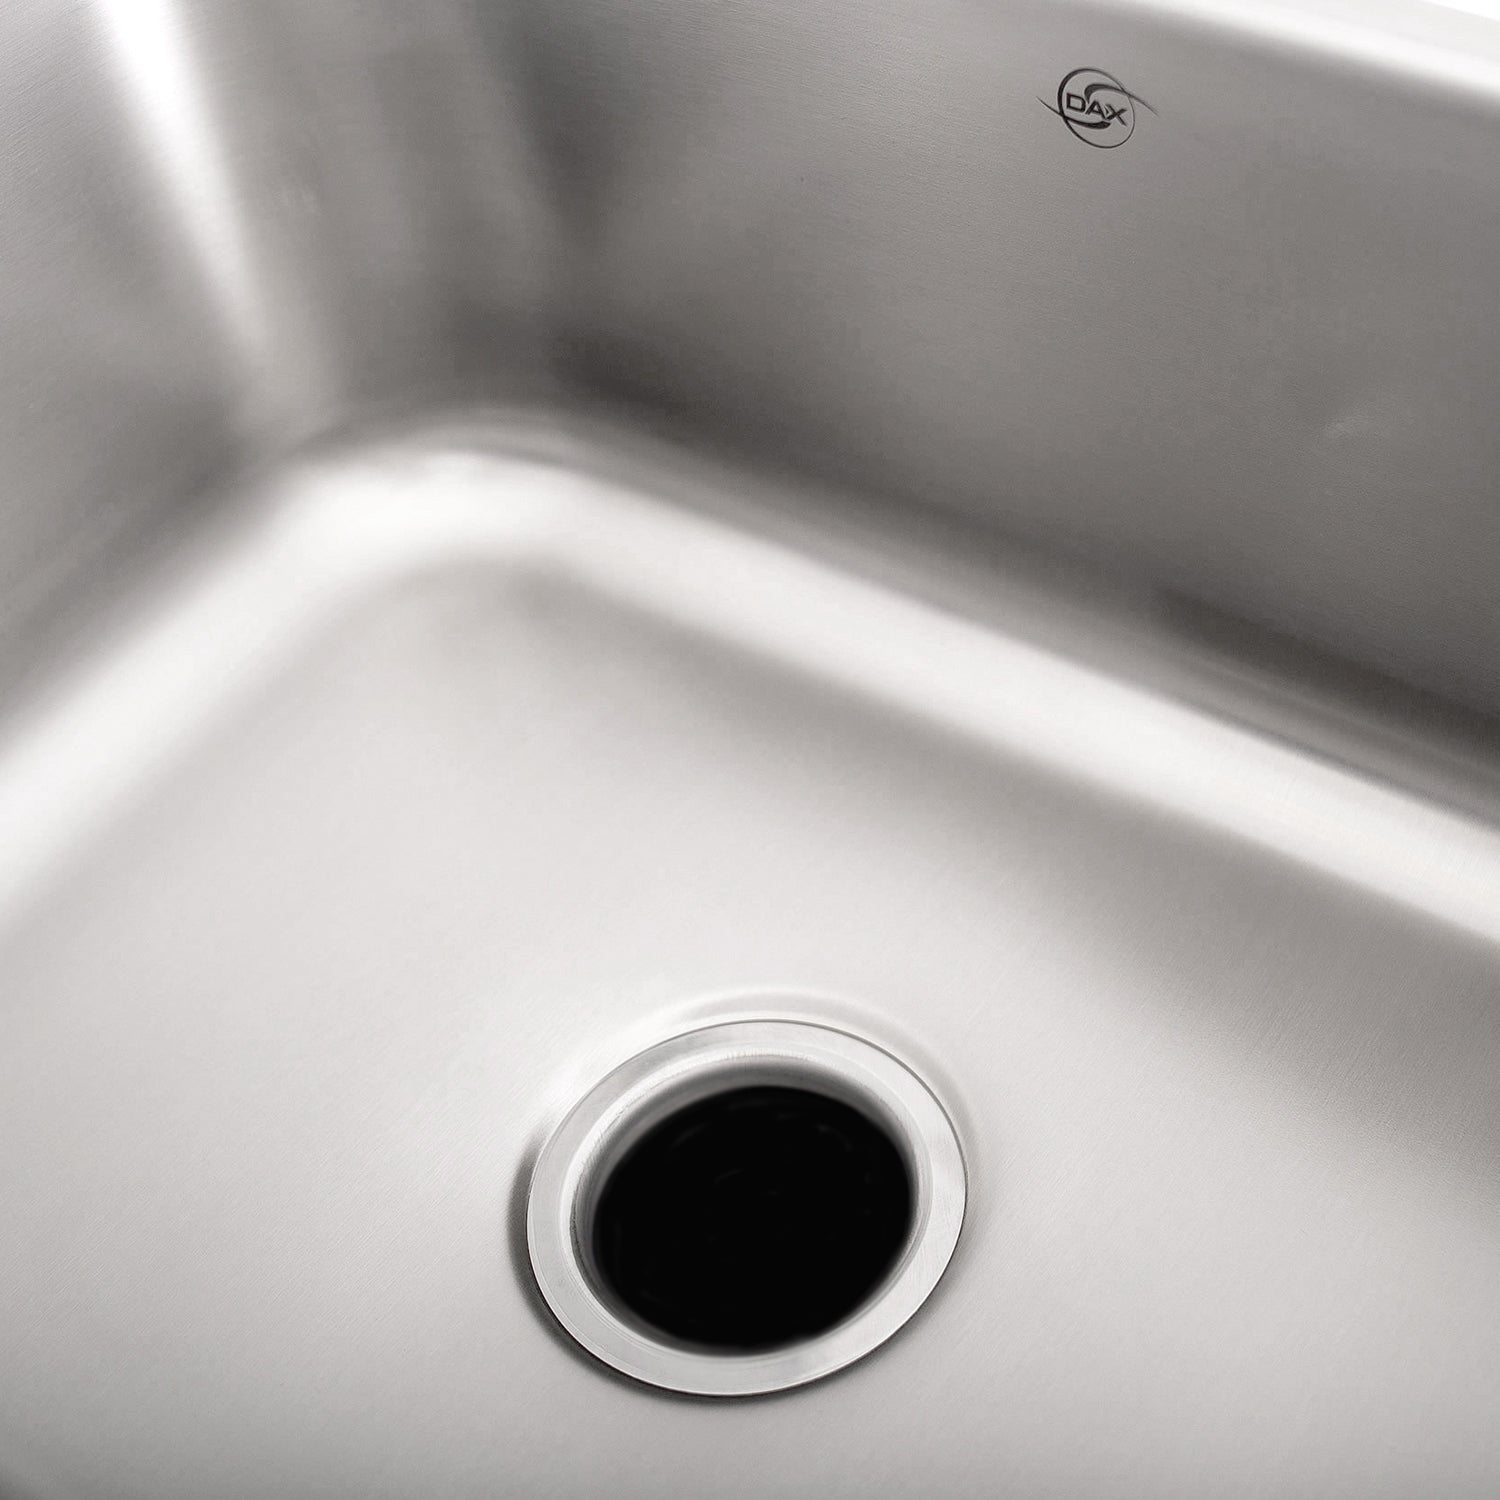 DAX Single Bowl Undermount Kitchen Sink, 18 Gauge Stainless Steel, Brushed Finish, 23-1/2 x 17-3/4 x 9 Inches (DAX-2317)